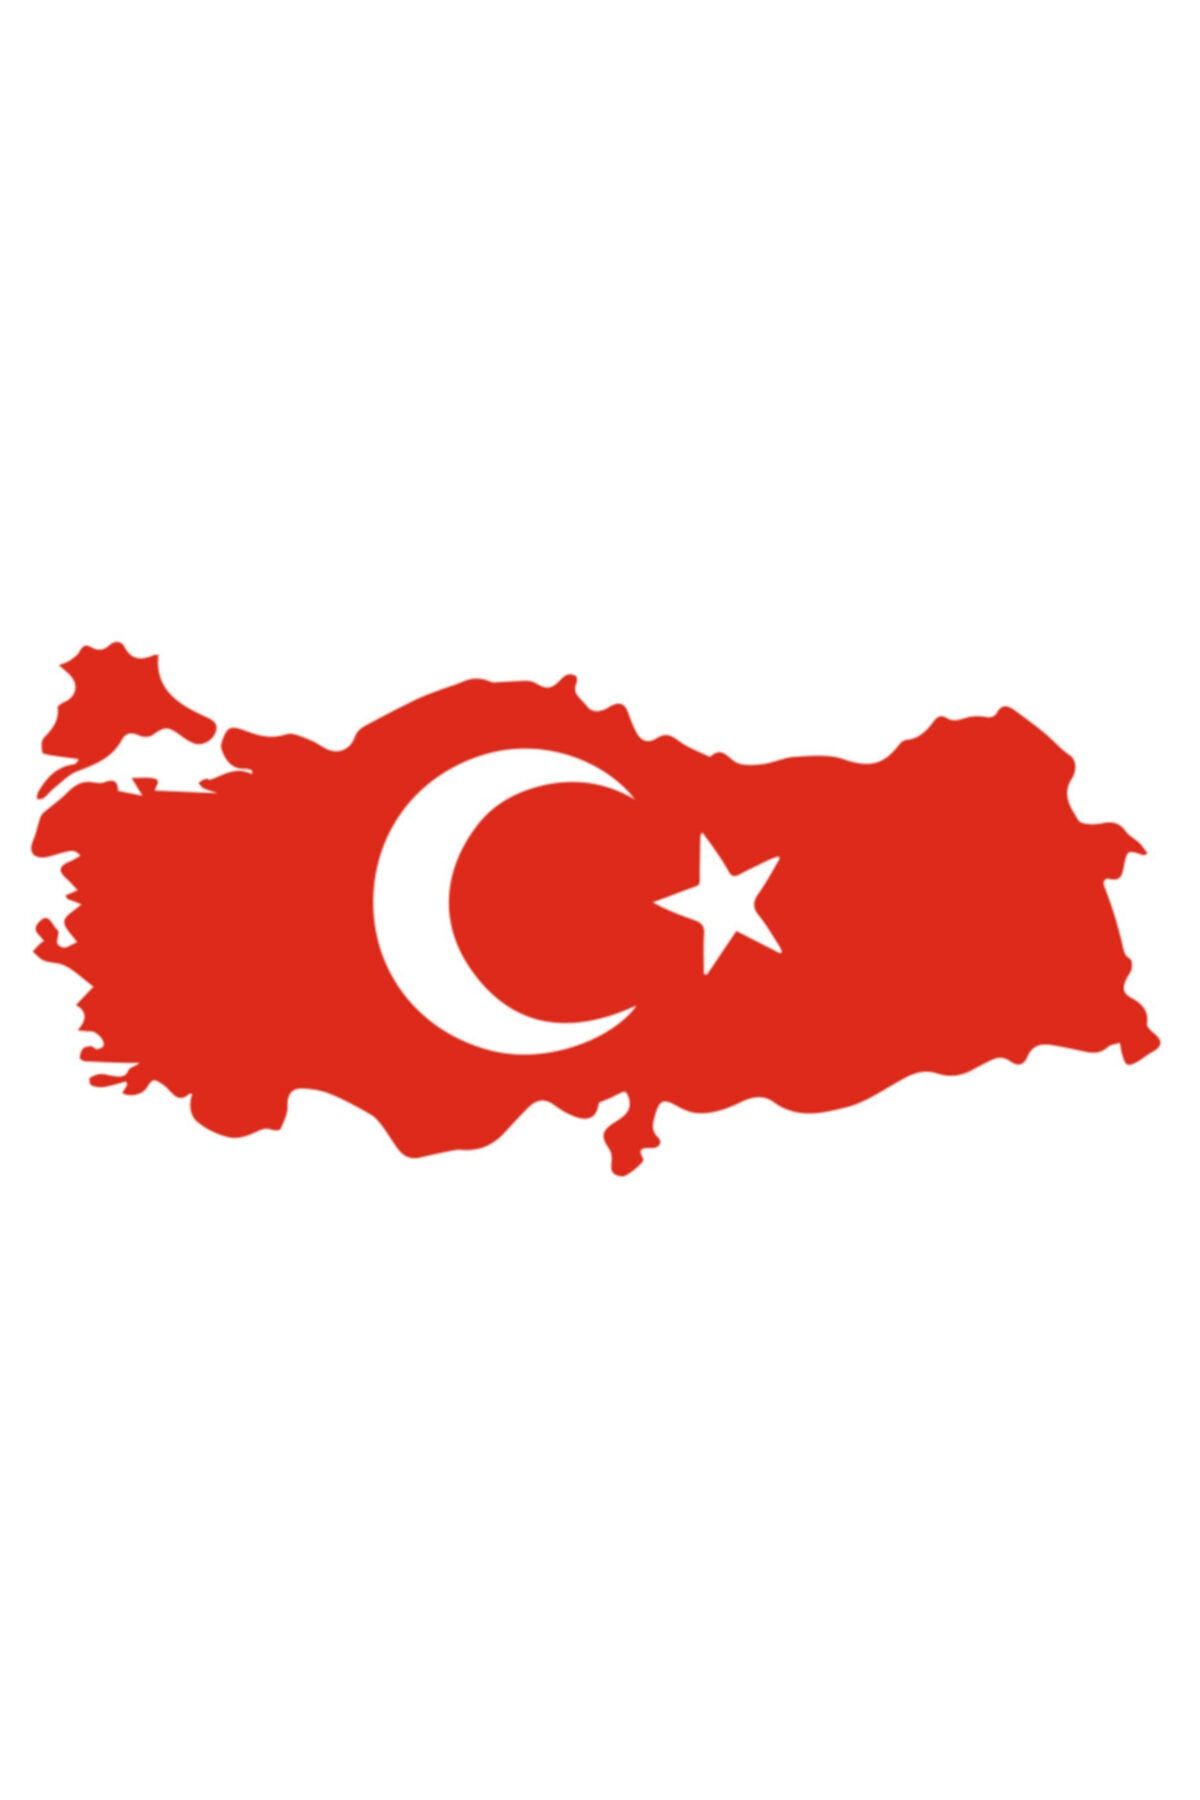 Turkey world. Турецкий флаг. Флаг Турции на сране.